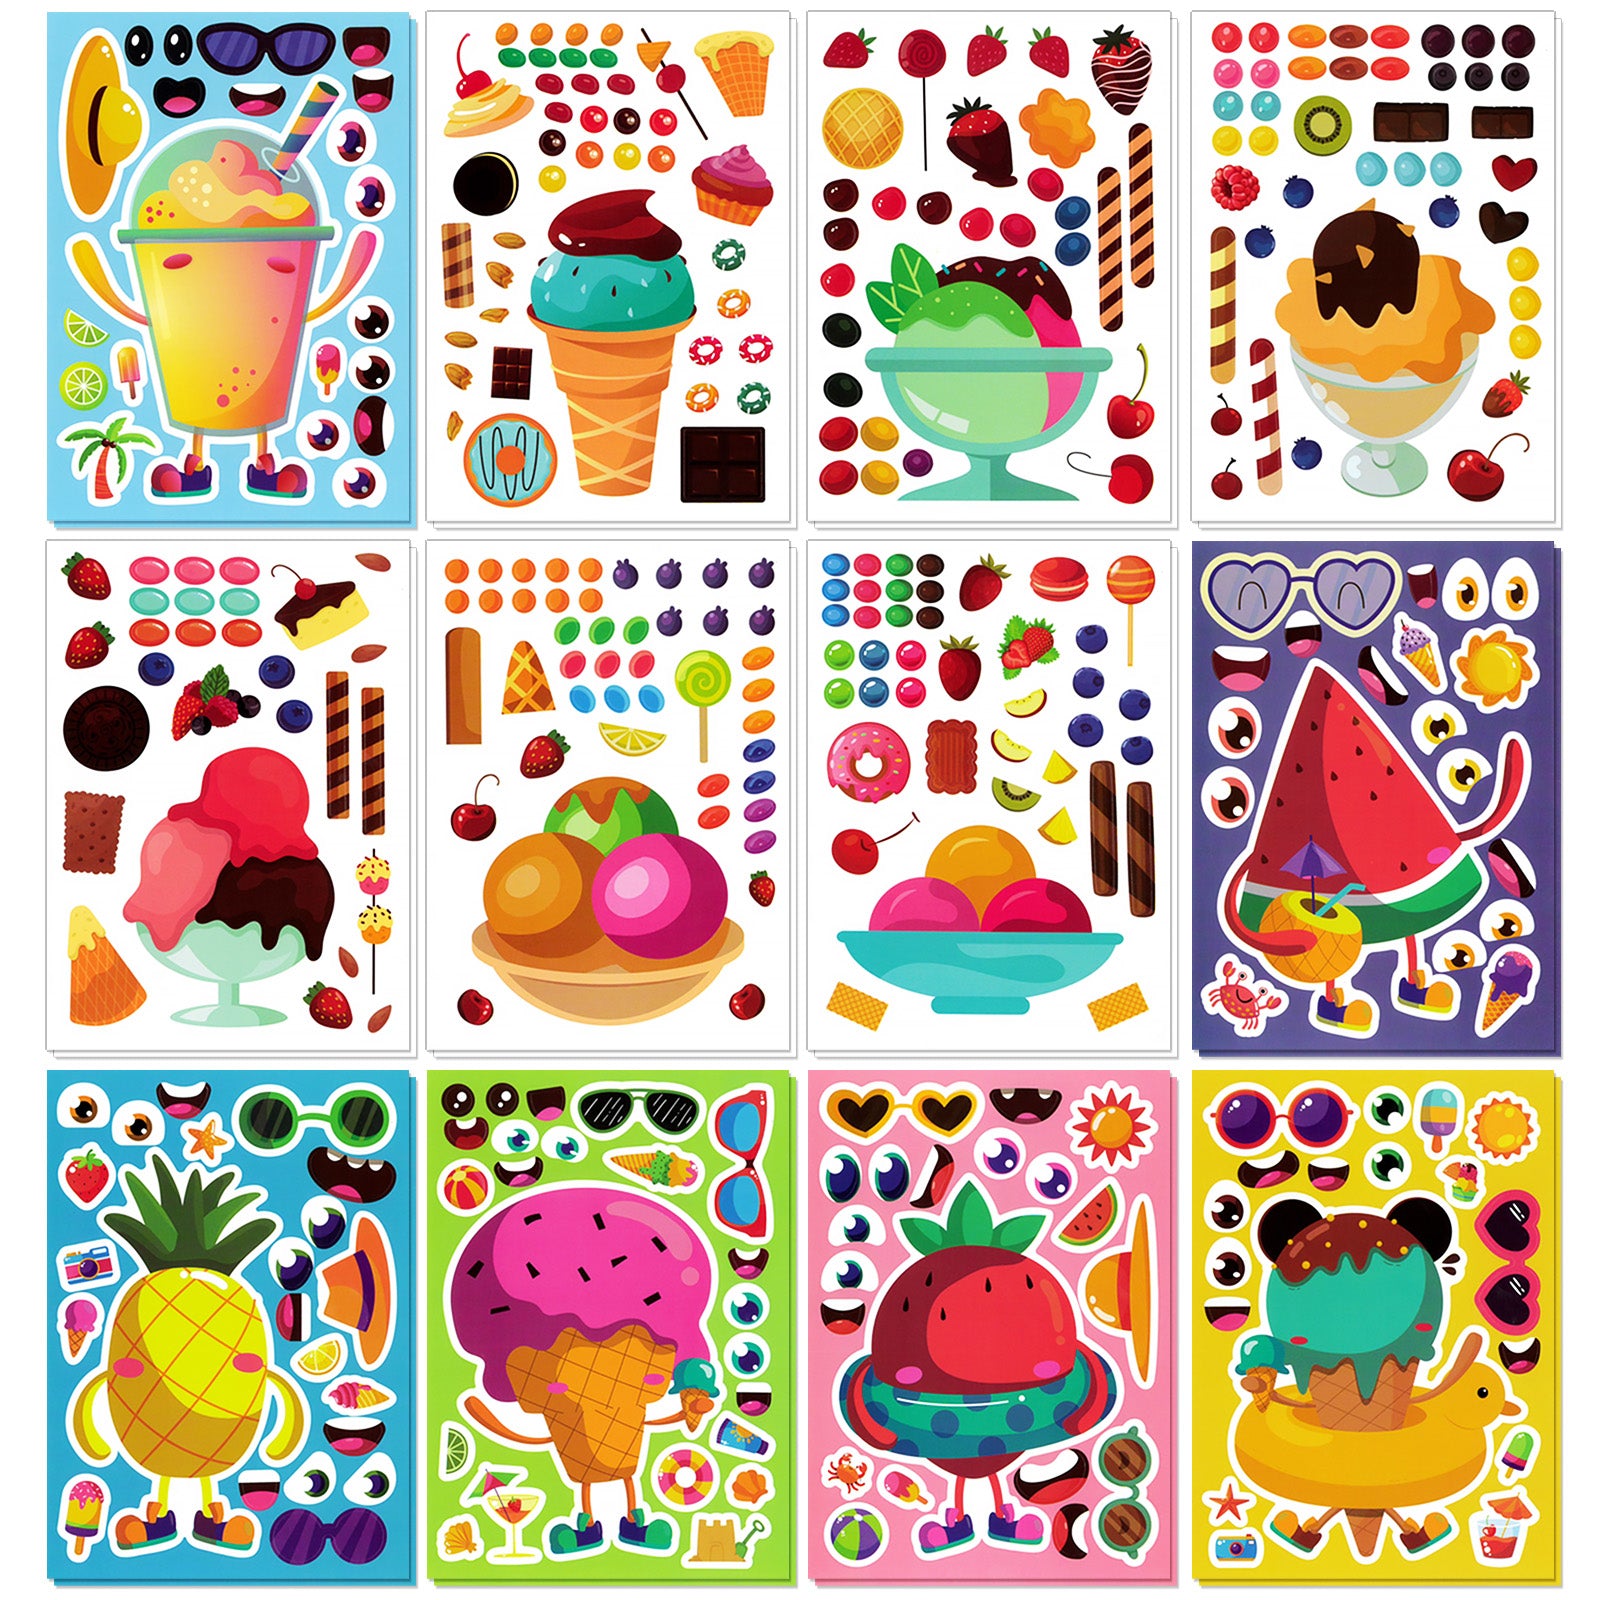 36 Pieces Sticker Sheet, Sticker Packs Kids, Princess Stickers for Kids, Make A Face Stickers Sheets, Make Your Own Sticker, Party Game Stickers DIY